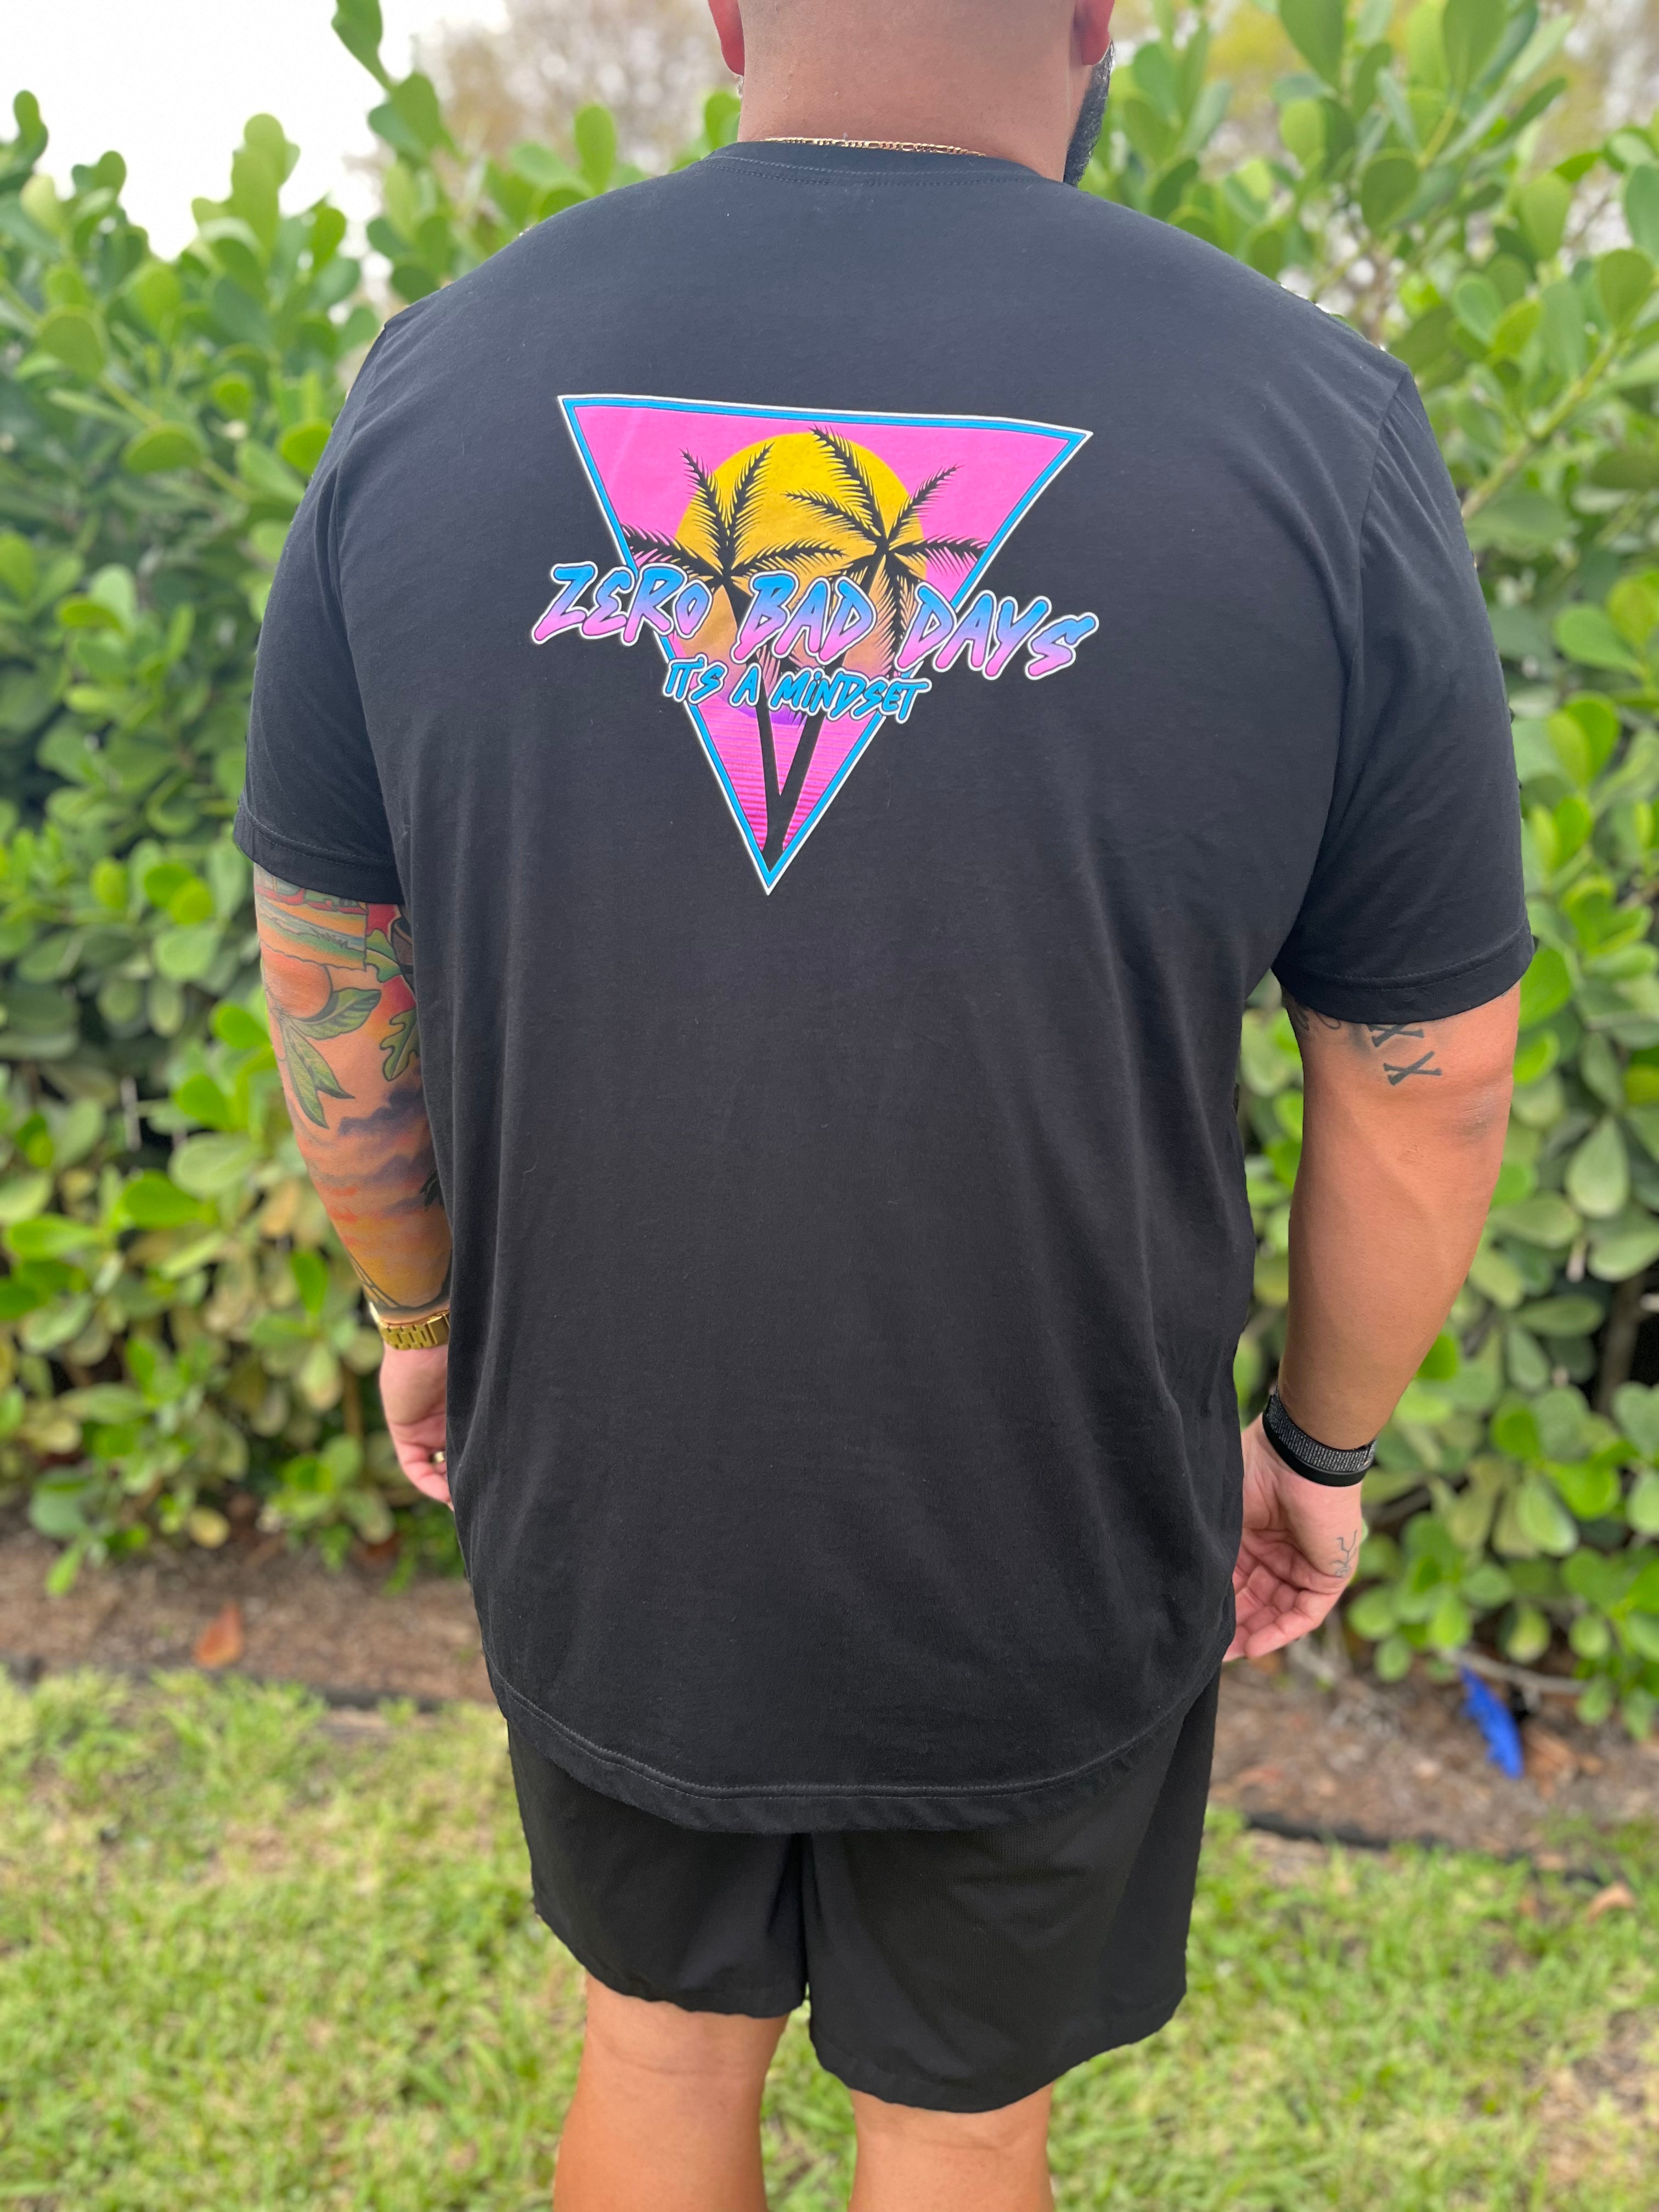 Miami Vice 80s Retro Logo Black T-Shirt